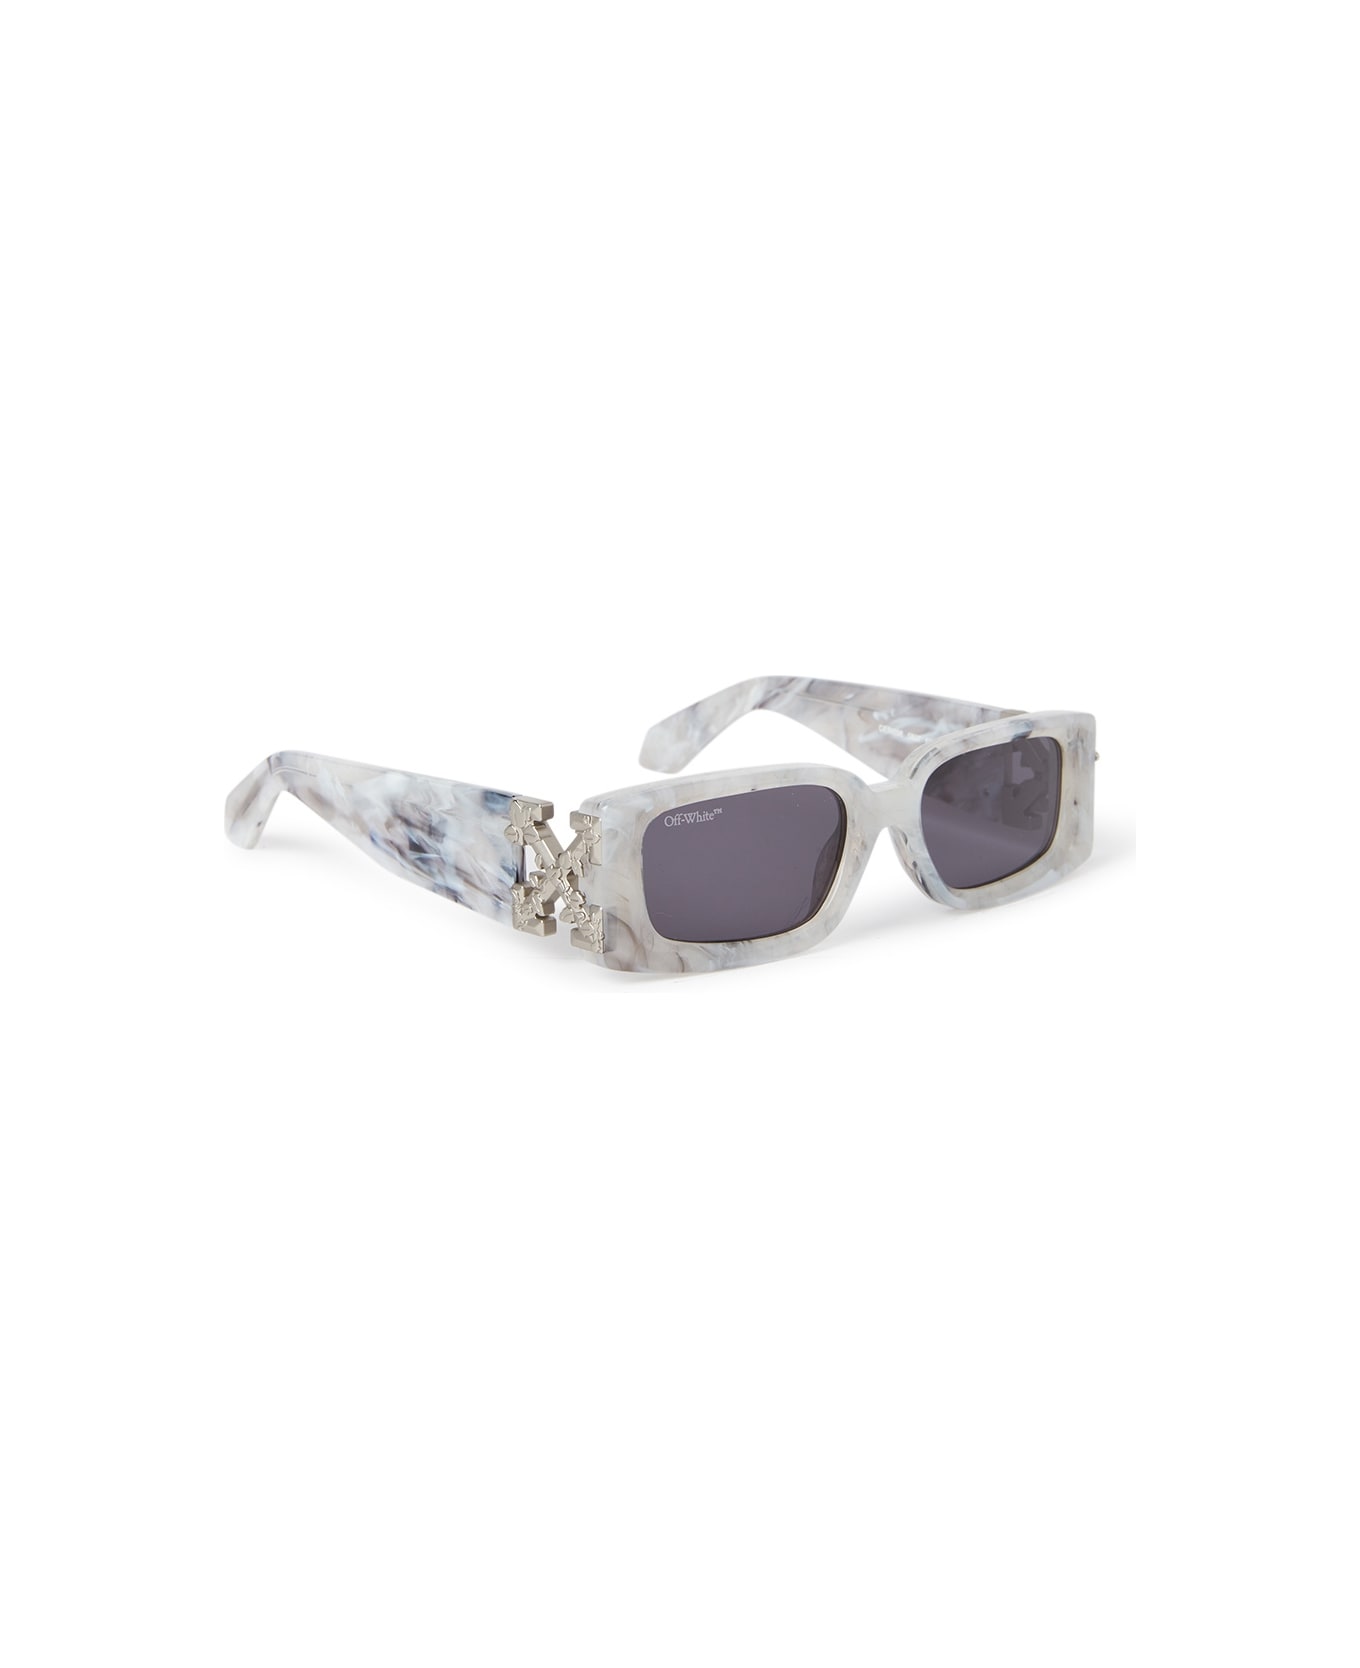 Off-White Roma Sunglasses - 0807 MARBLE